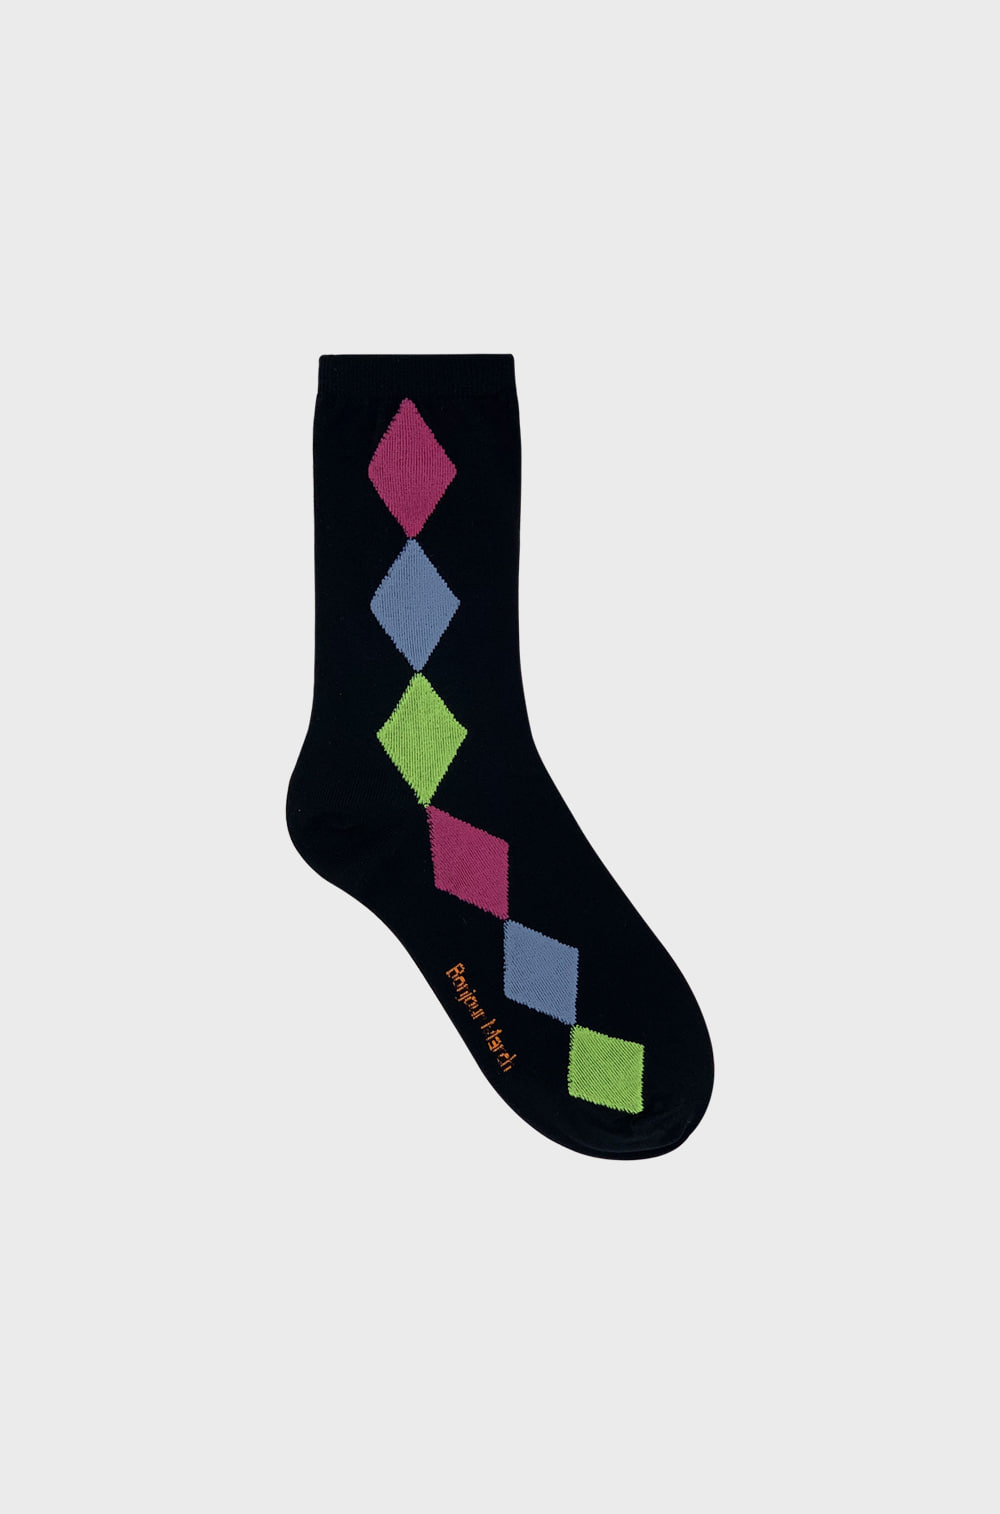 Black argyle socks